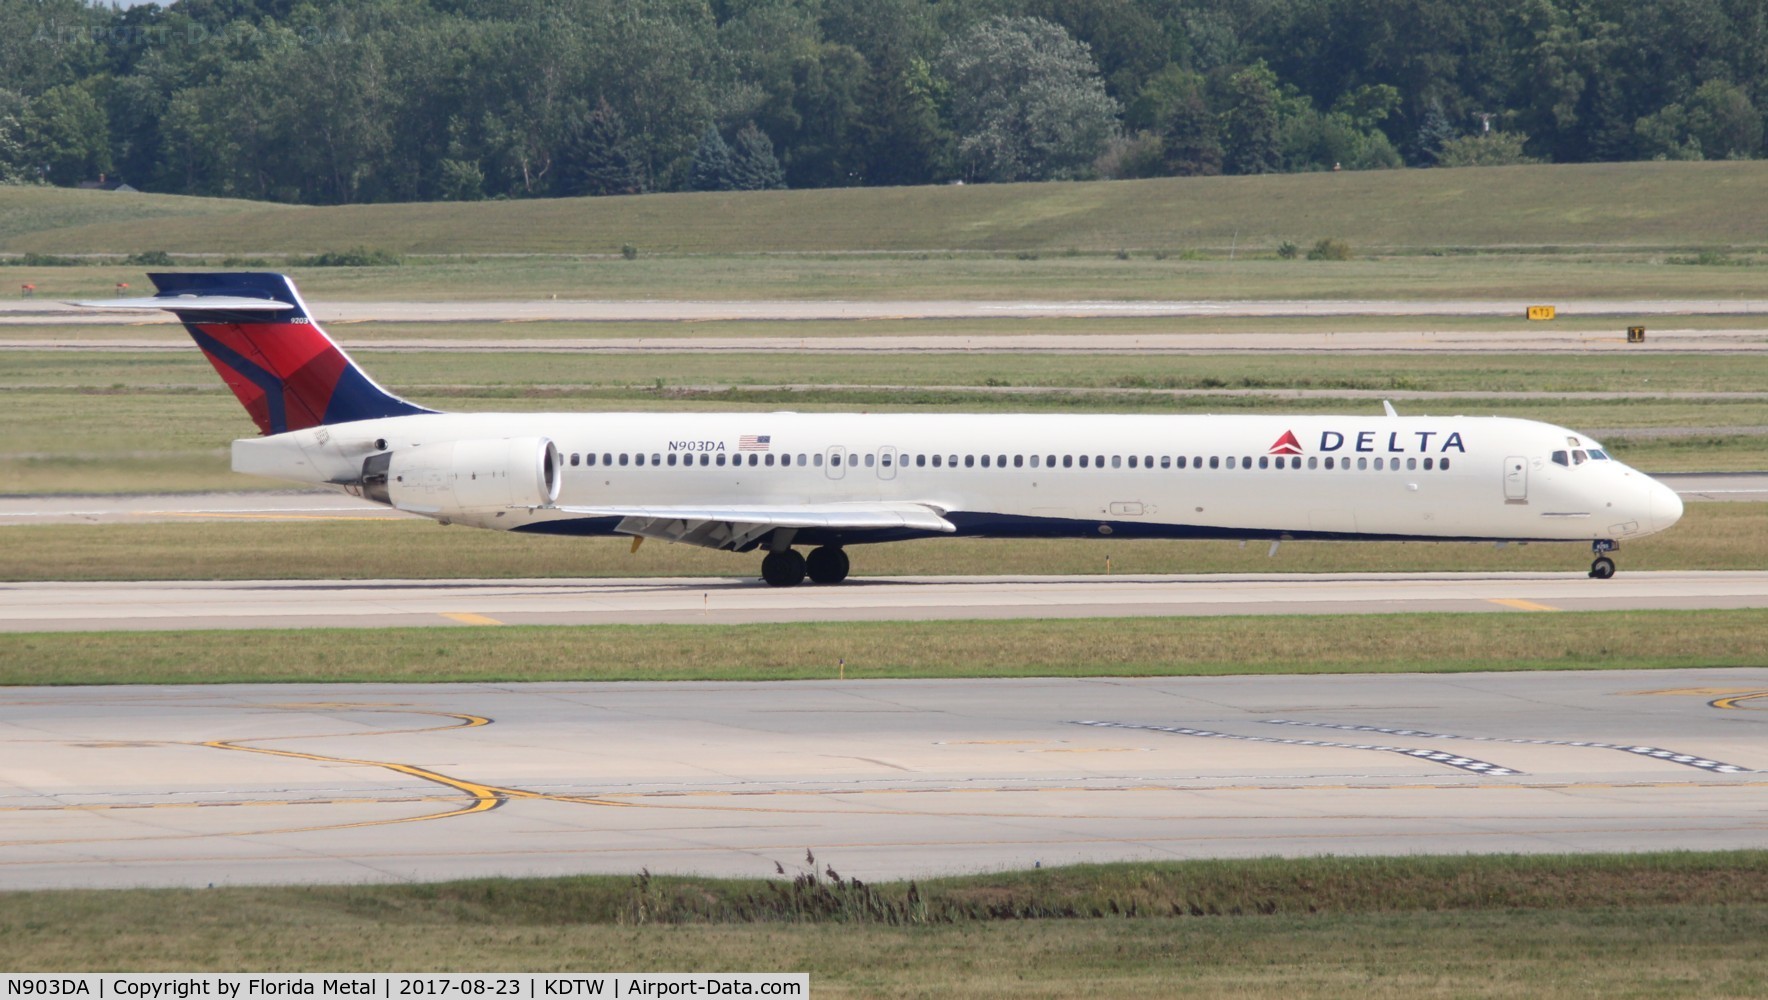 N903DA, 1995 McDonnell Douglas MD-90-30 C/N 53383, DTW spotting